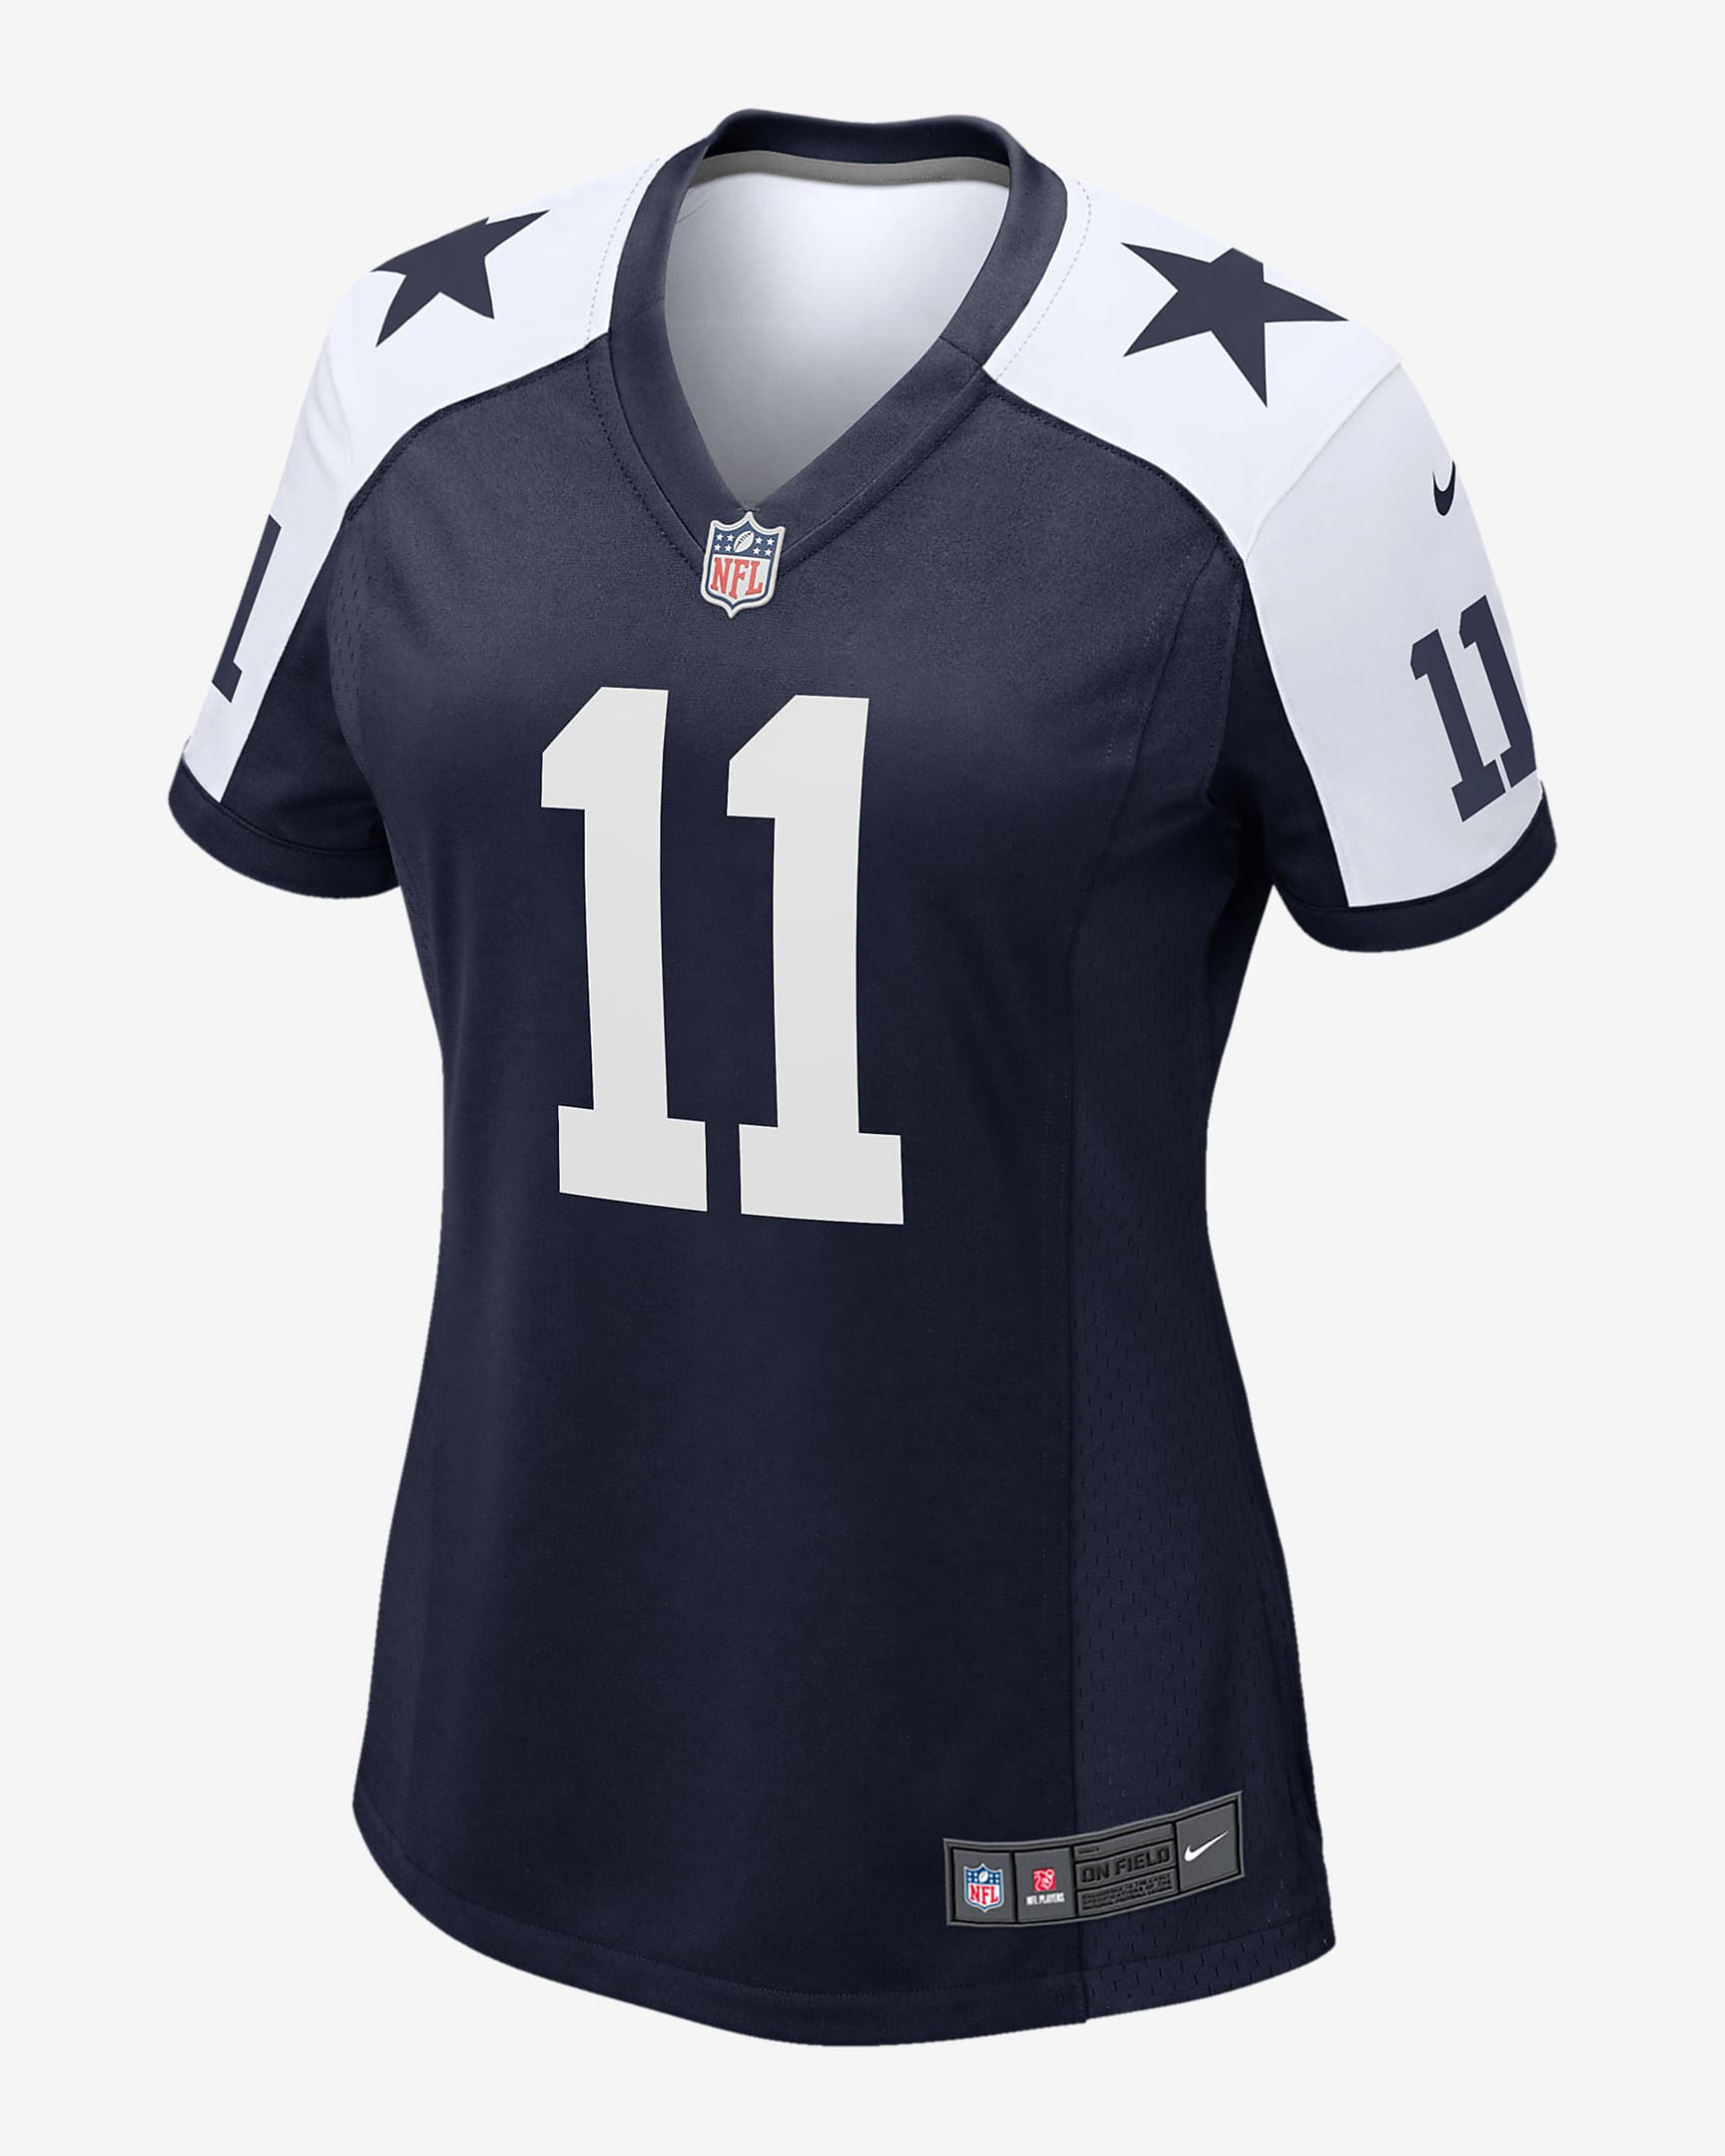 NFL Dallas Cowboys (Micah Parsons) Women's Game Football Jersey. Nike.com